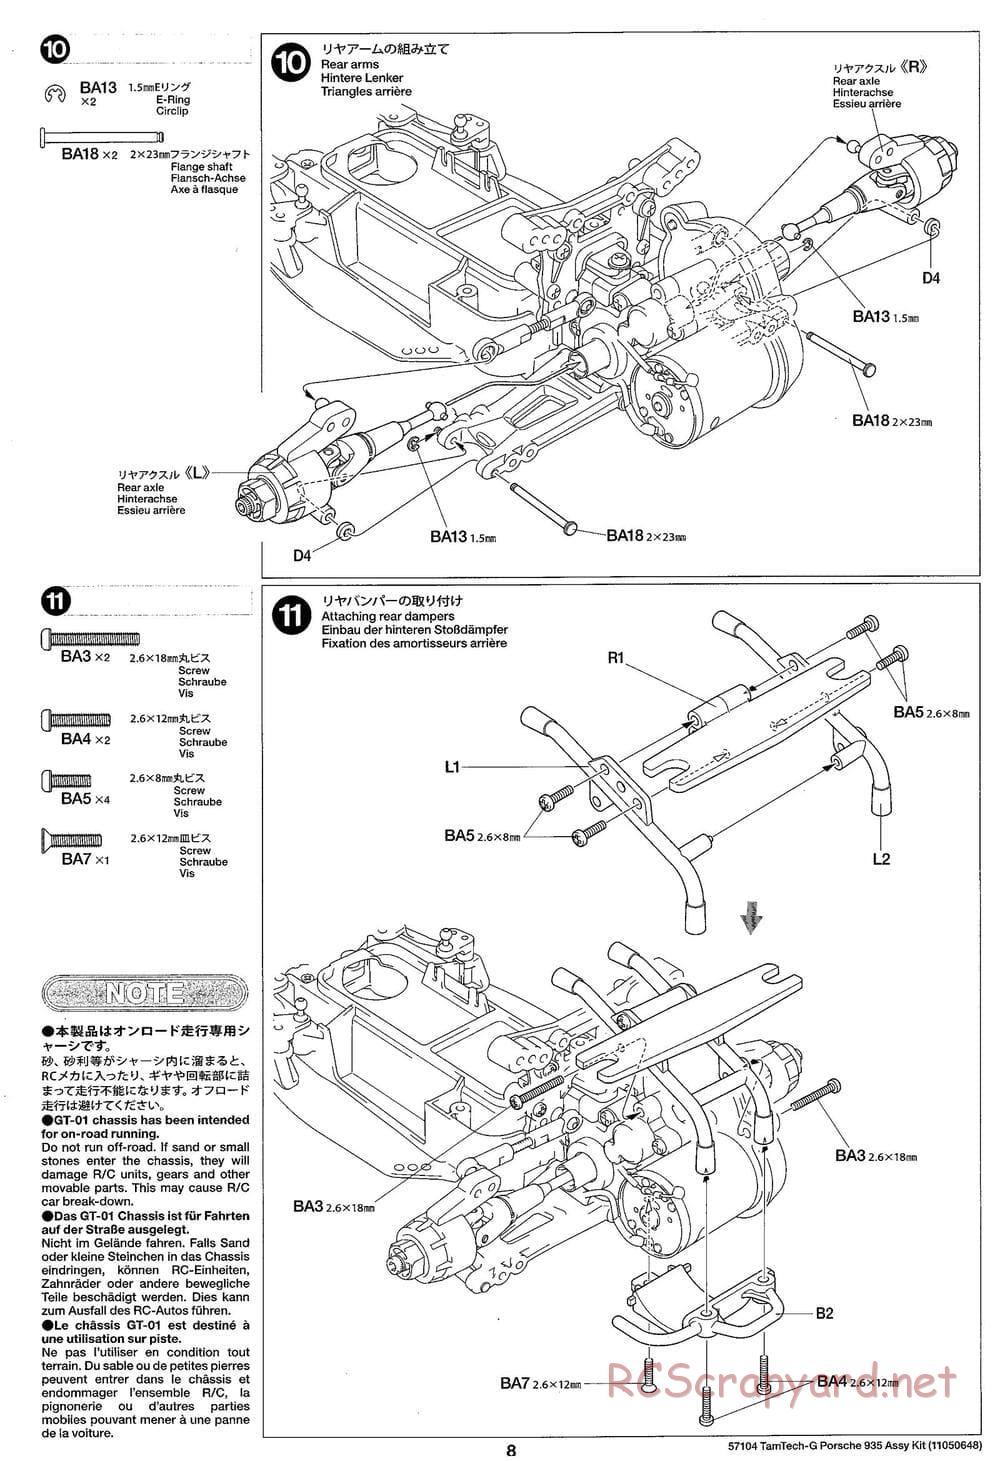 Tamiya - Porsche 935 Martini - GT-01 Chassis - Manual - Page 8